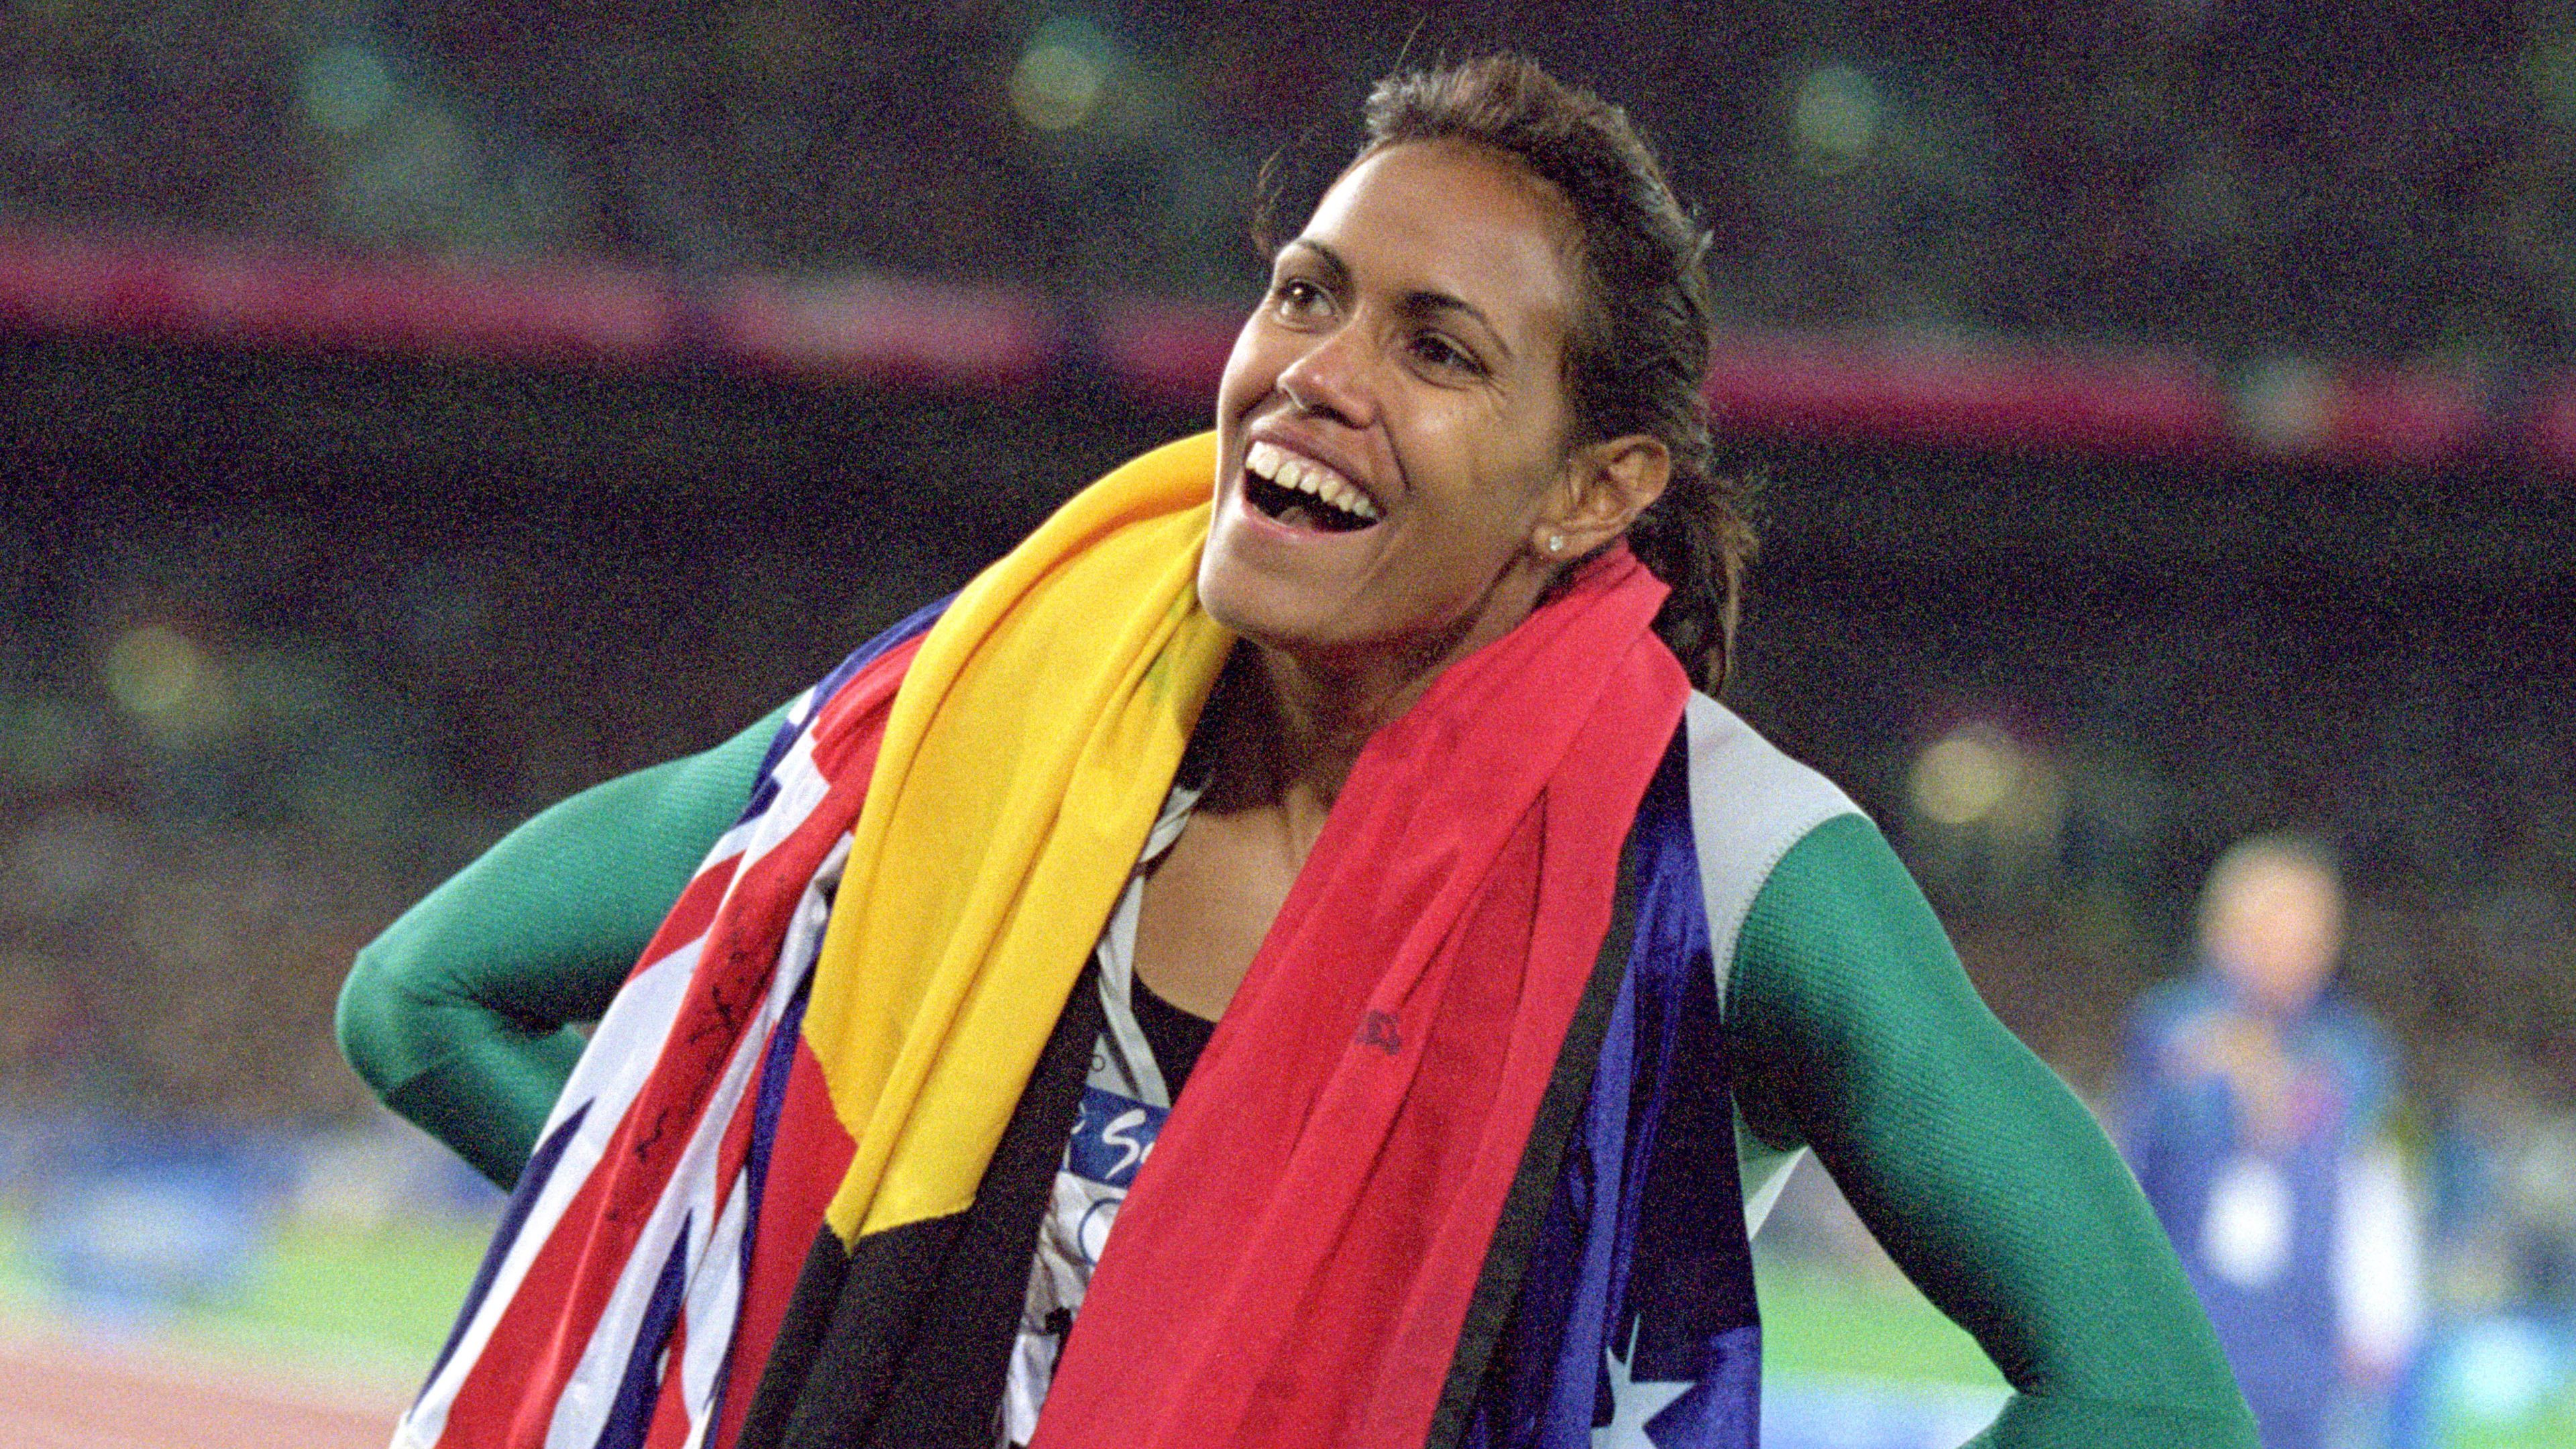 Australian Olympic hero Cathy Freeman honoured by grandstand at stadium where she won gold